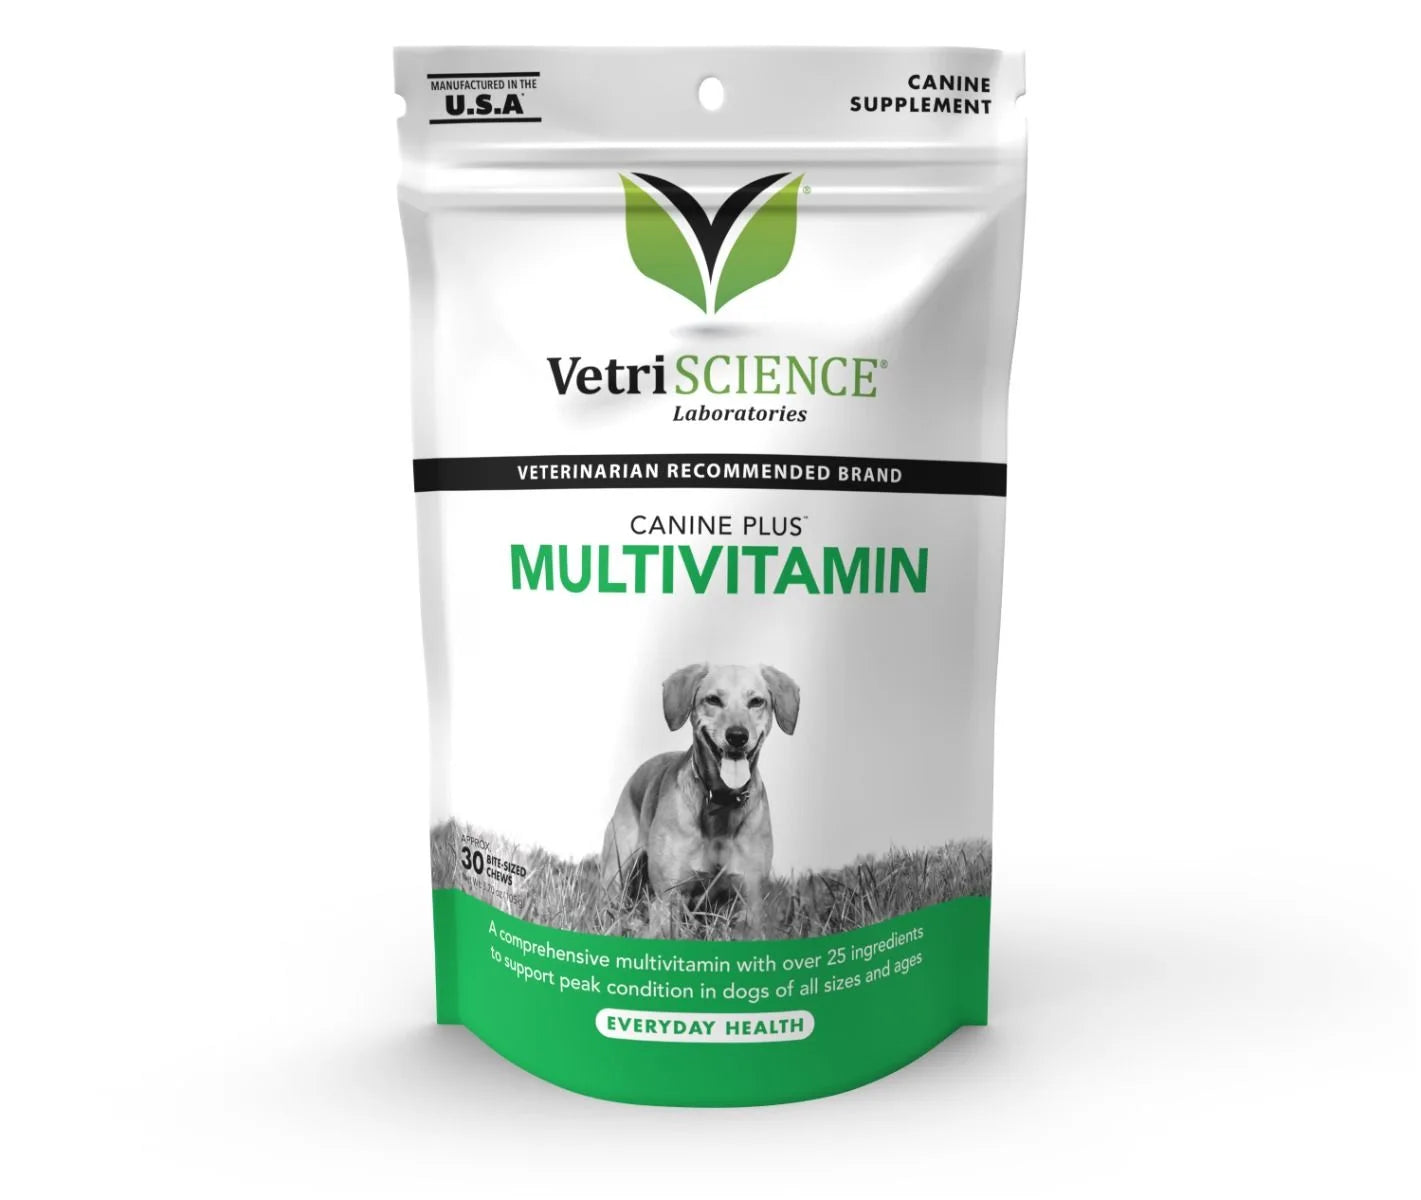 Vetriscience - Canine Plus Multivitamin (30 chews)